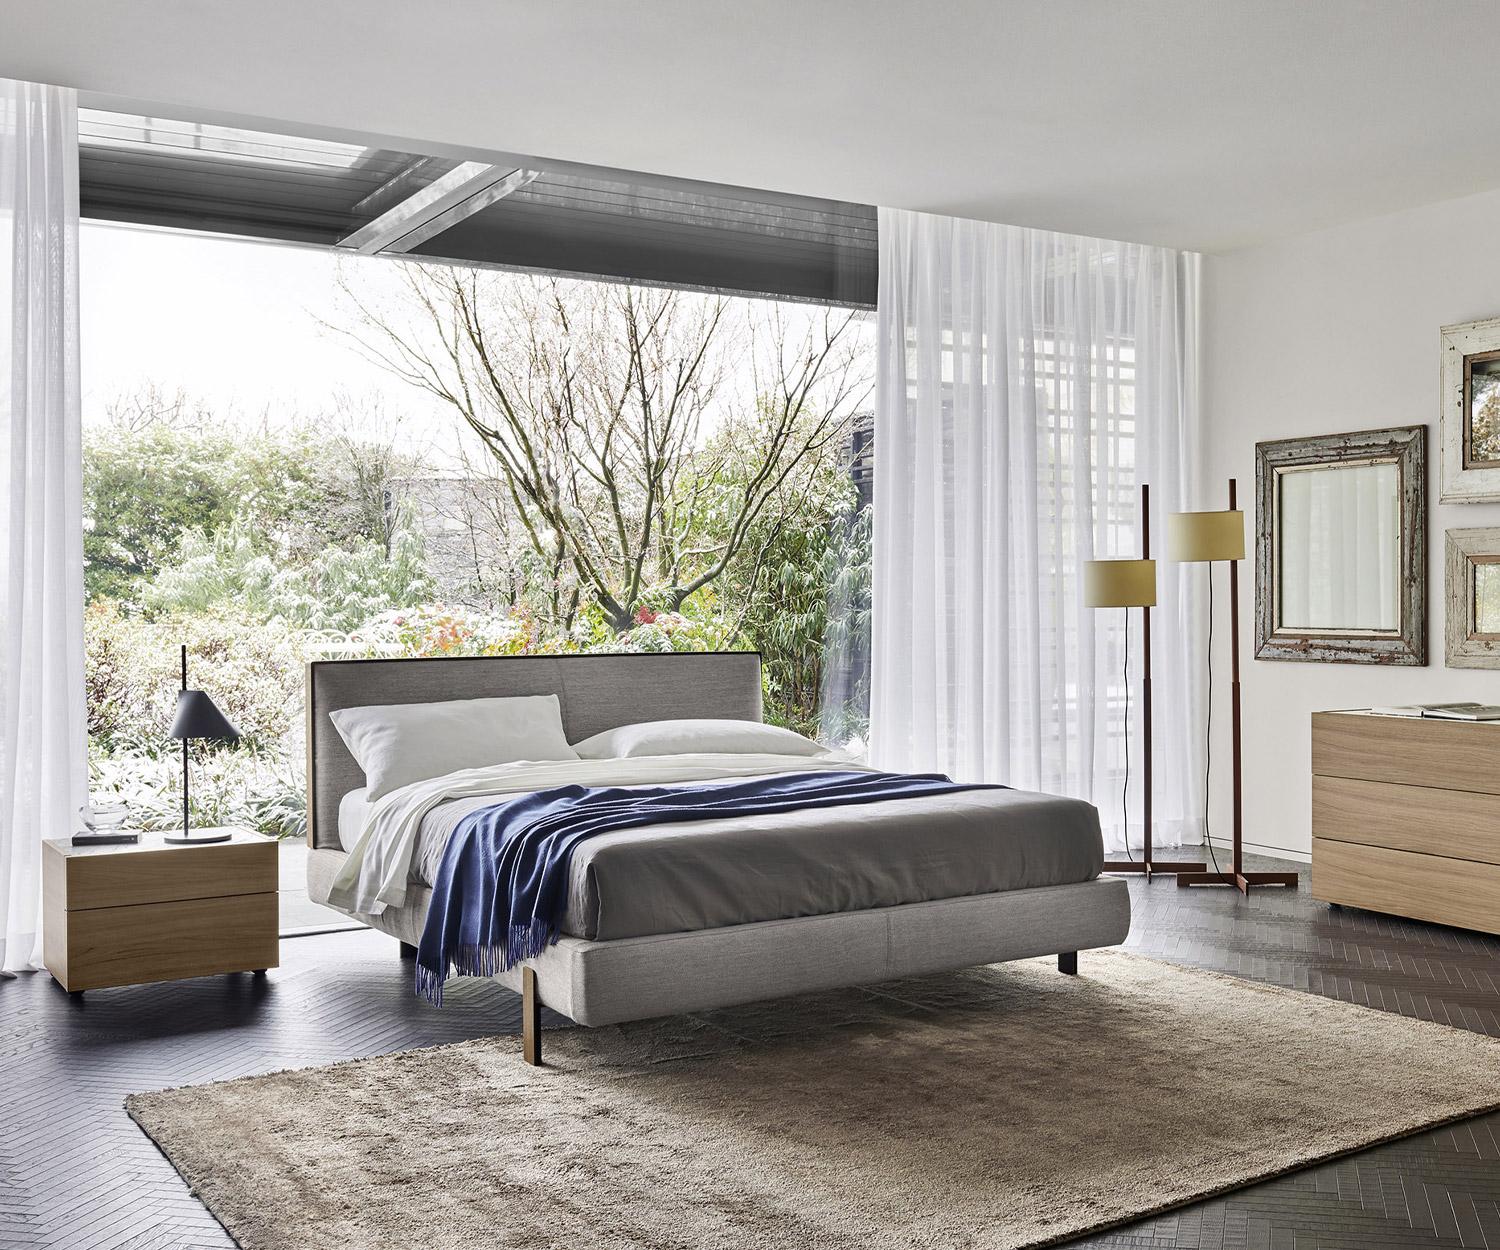 Exclusive Livitalia Design Bed Decor Fabric Cover Grey Bedroom